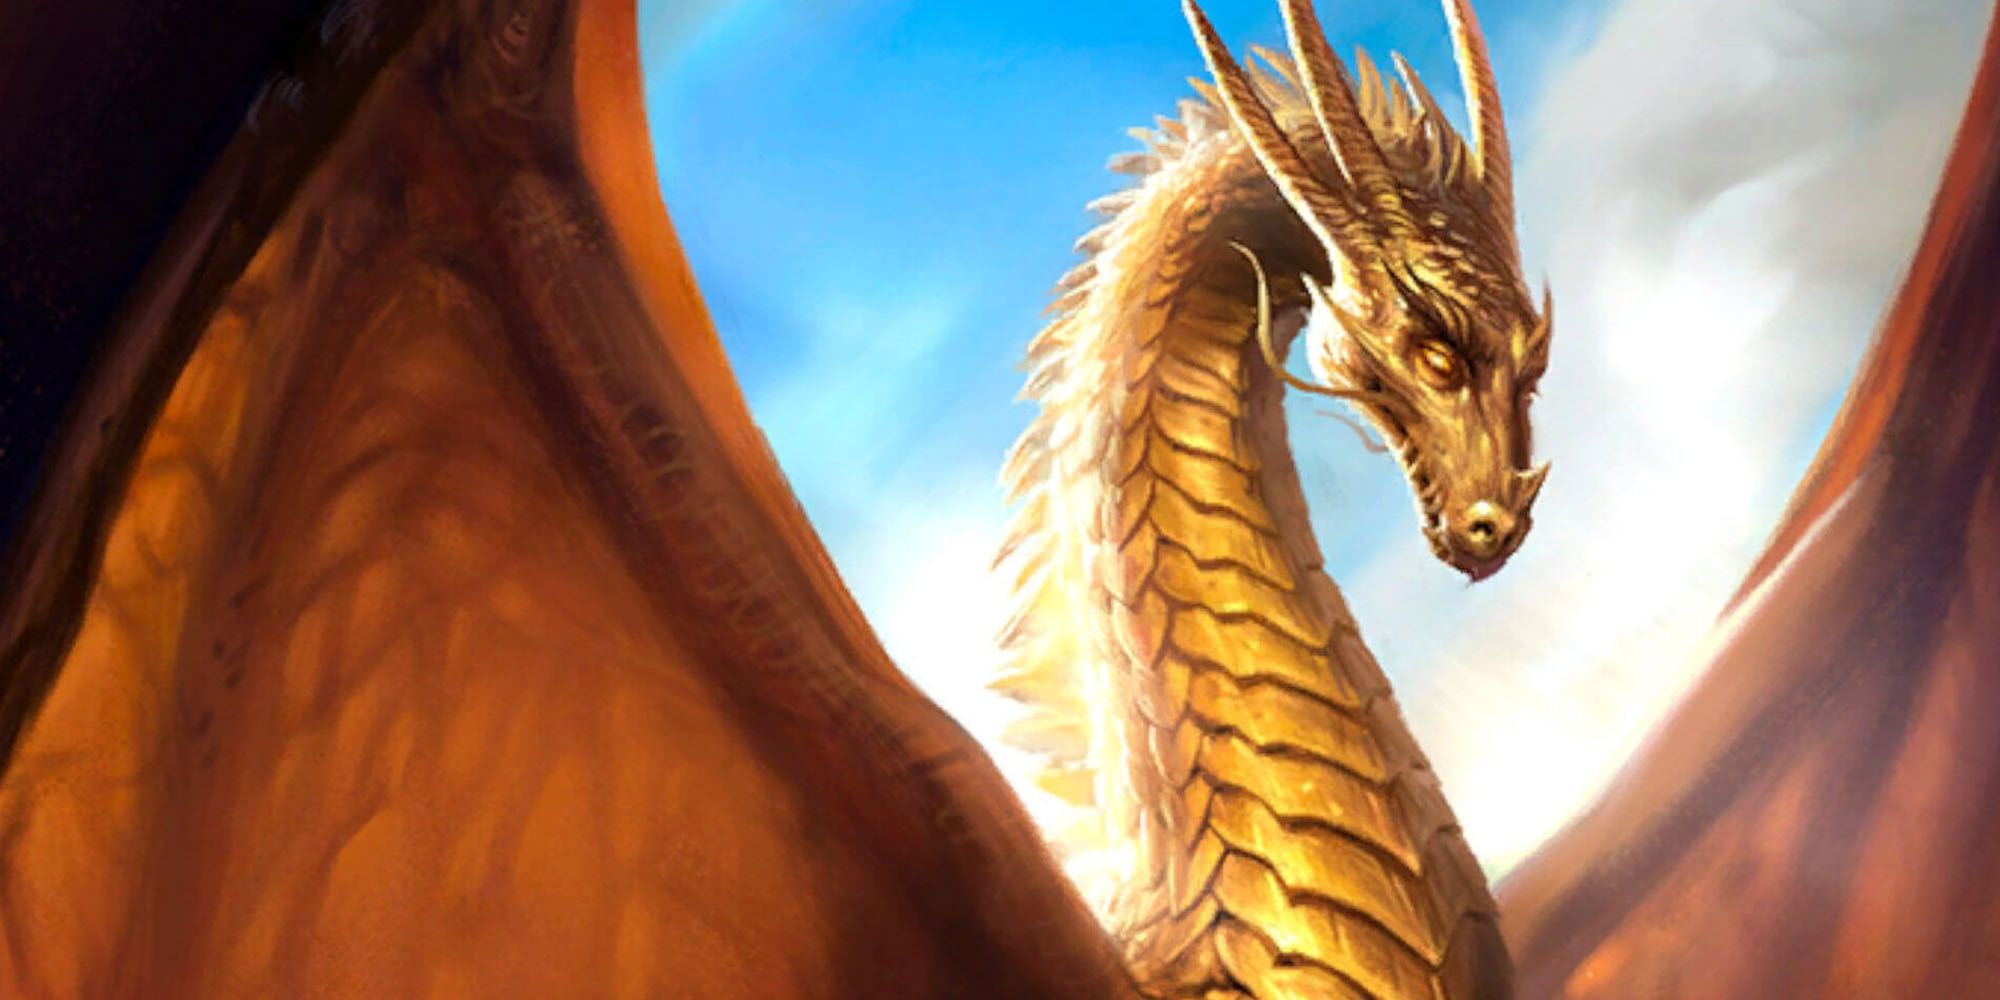 Brass Dragon - Dragons of Dark Fantasy